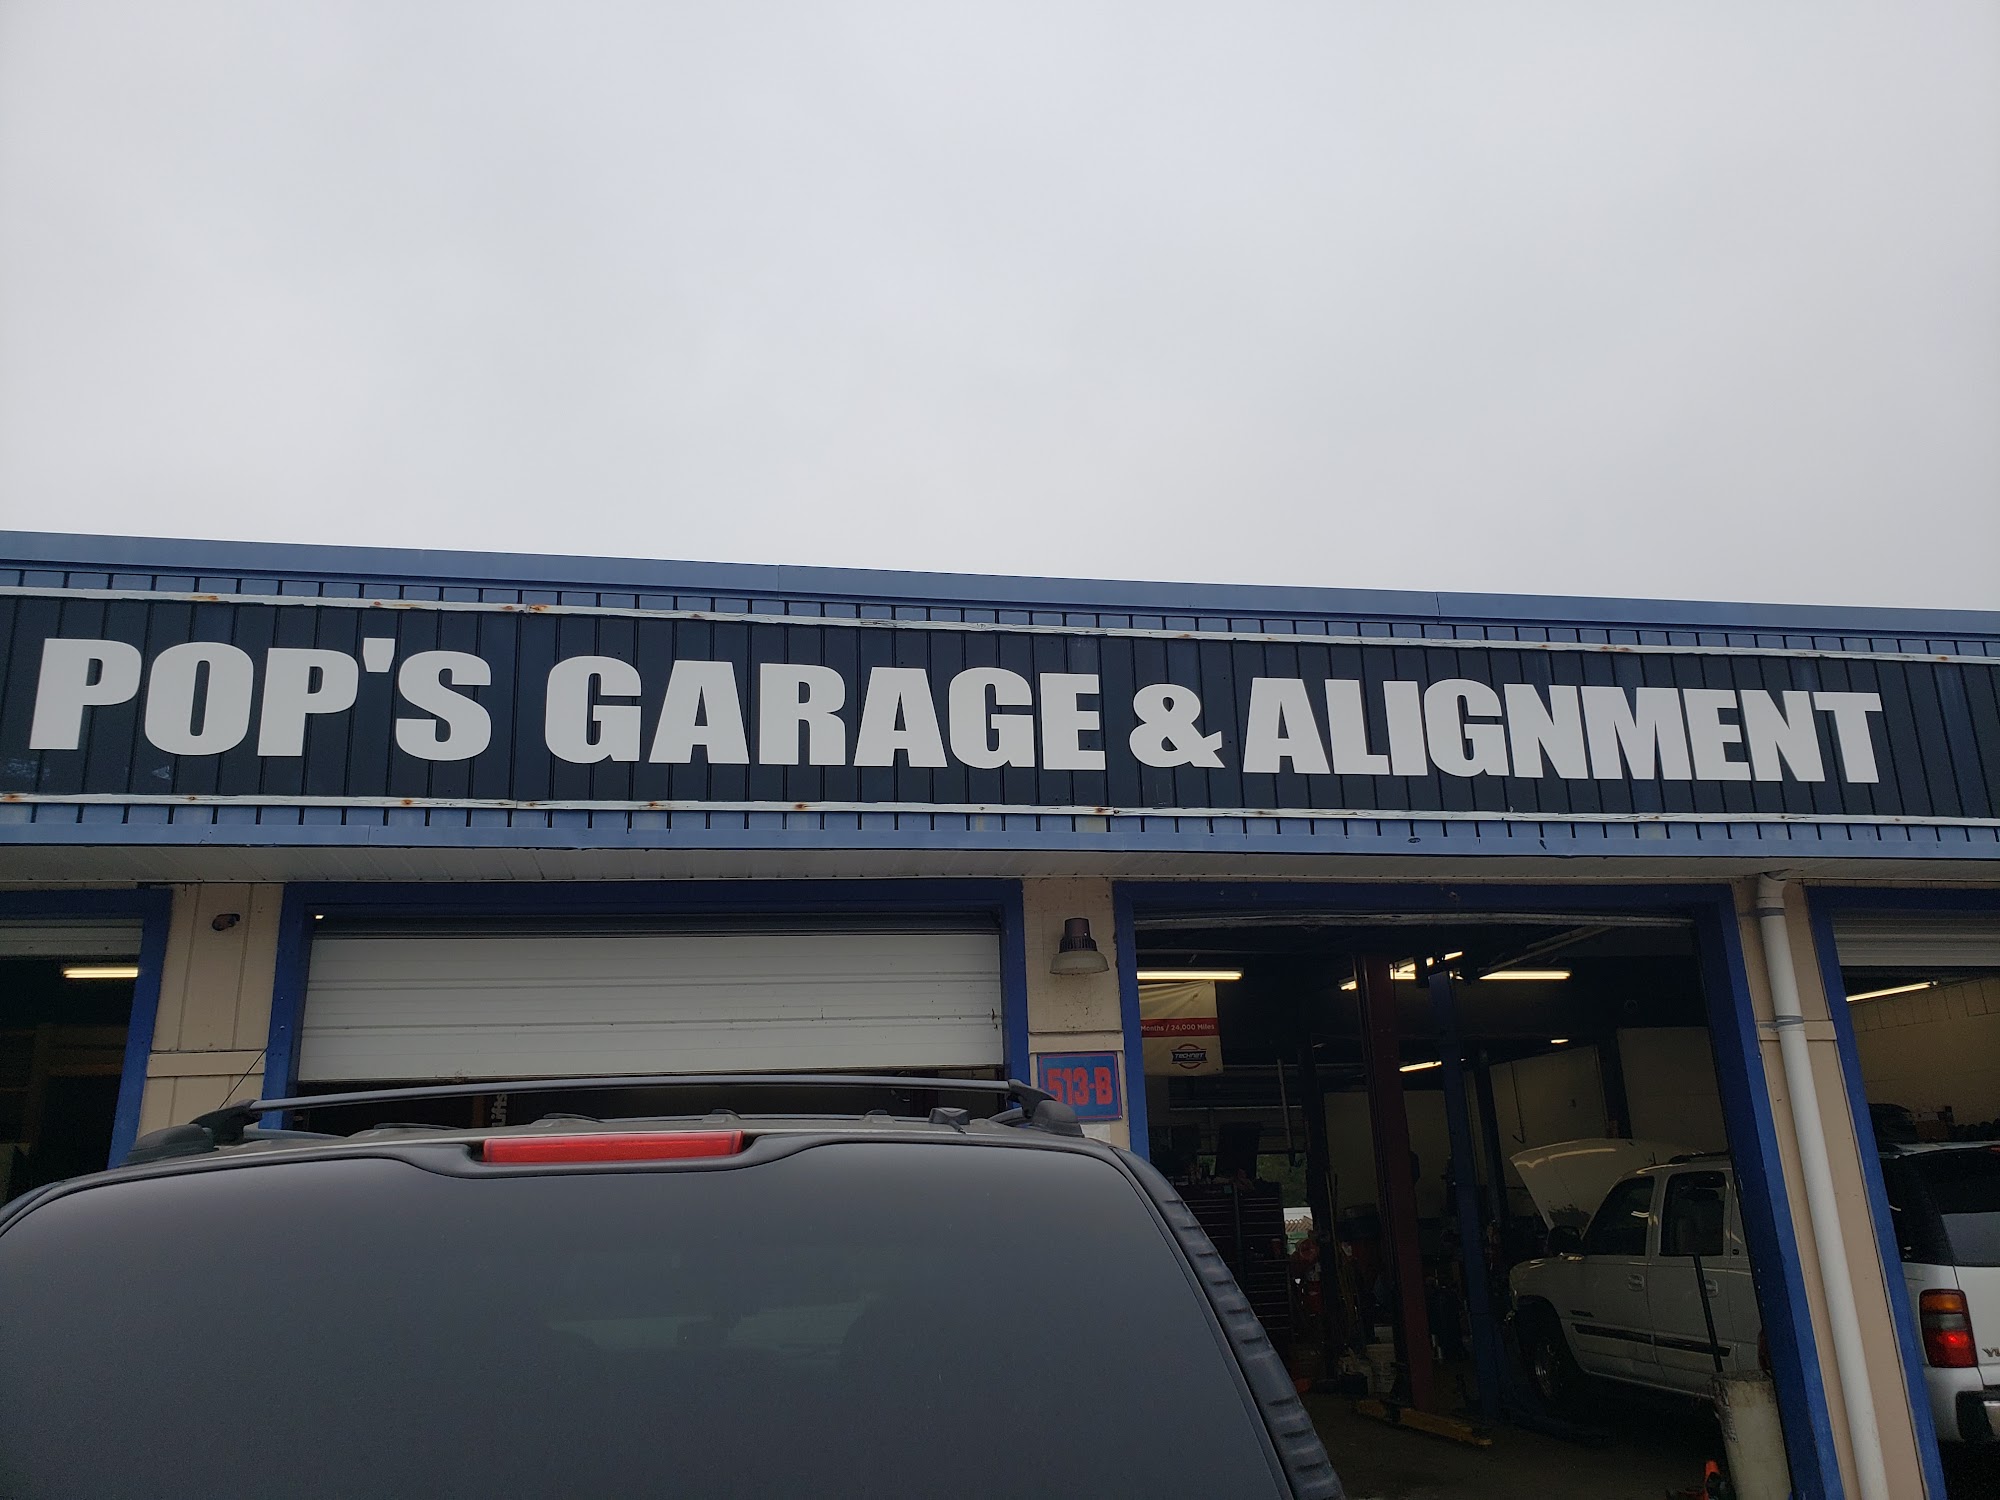 Pop's Garage & Alignment